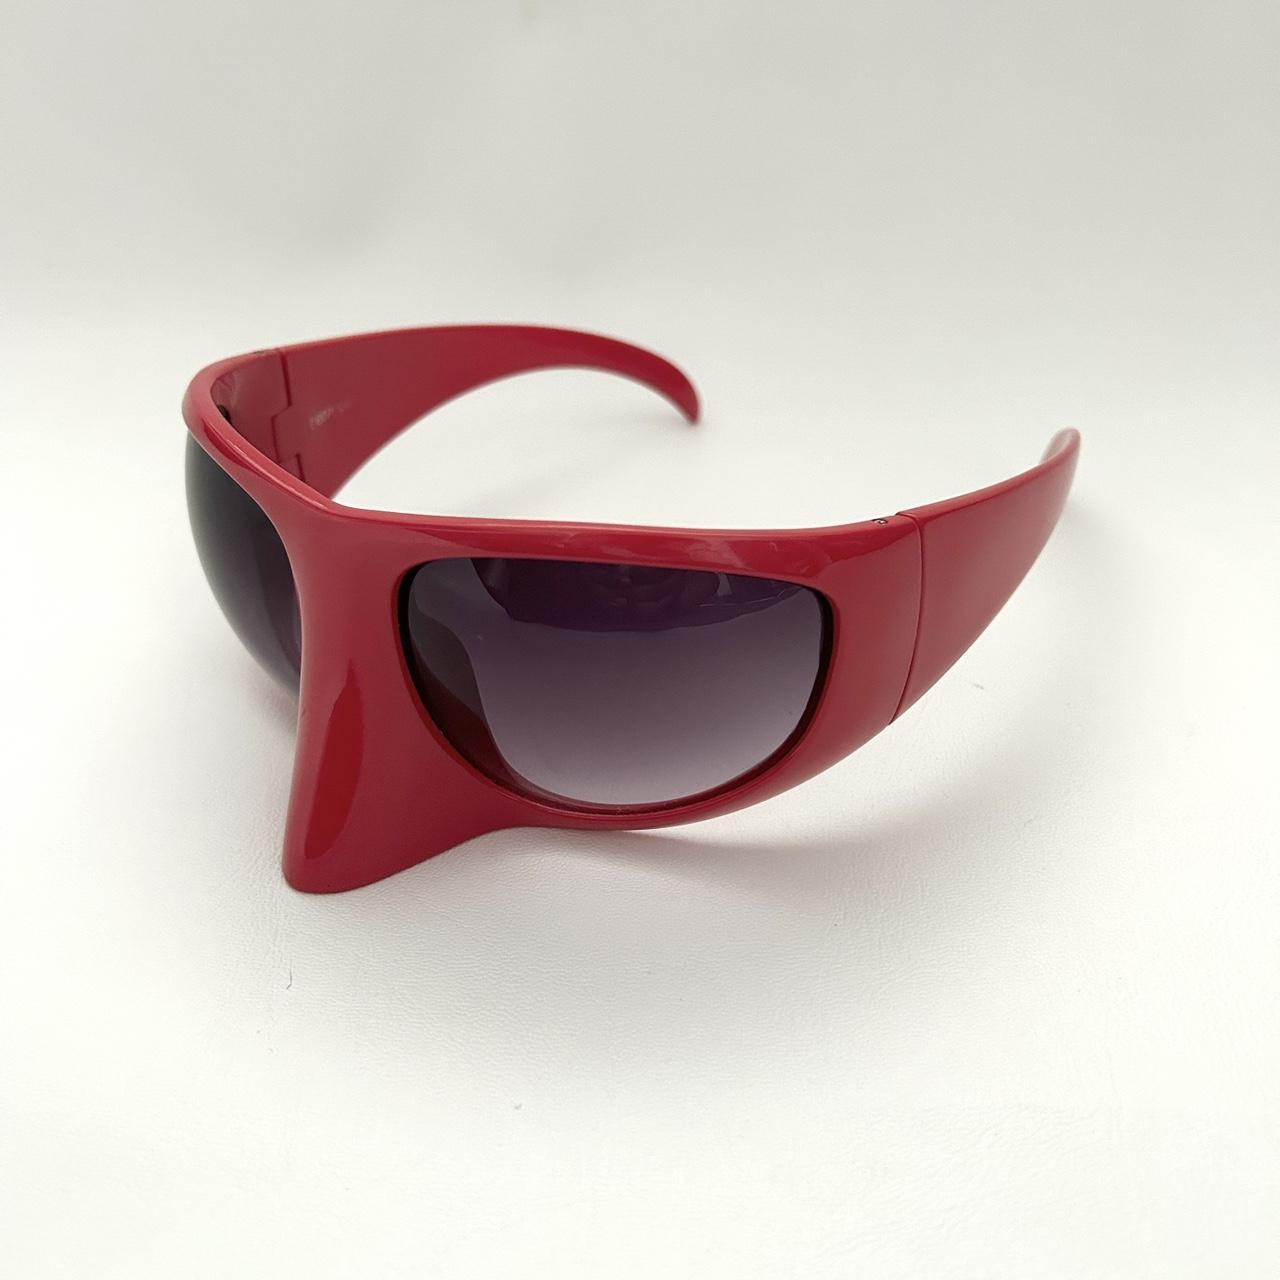 Bernhard Willhelm Mask Sunglasses